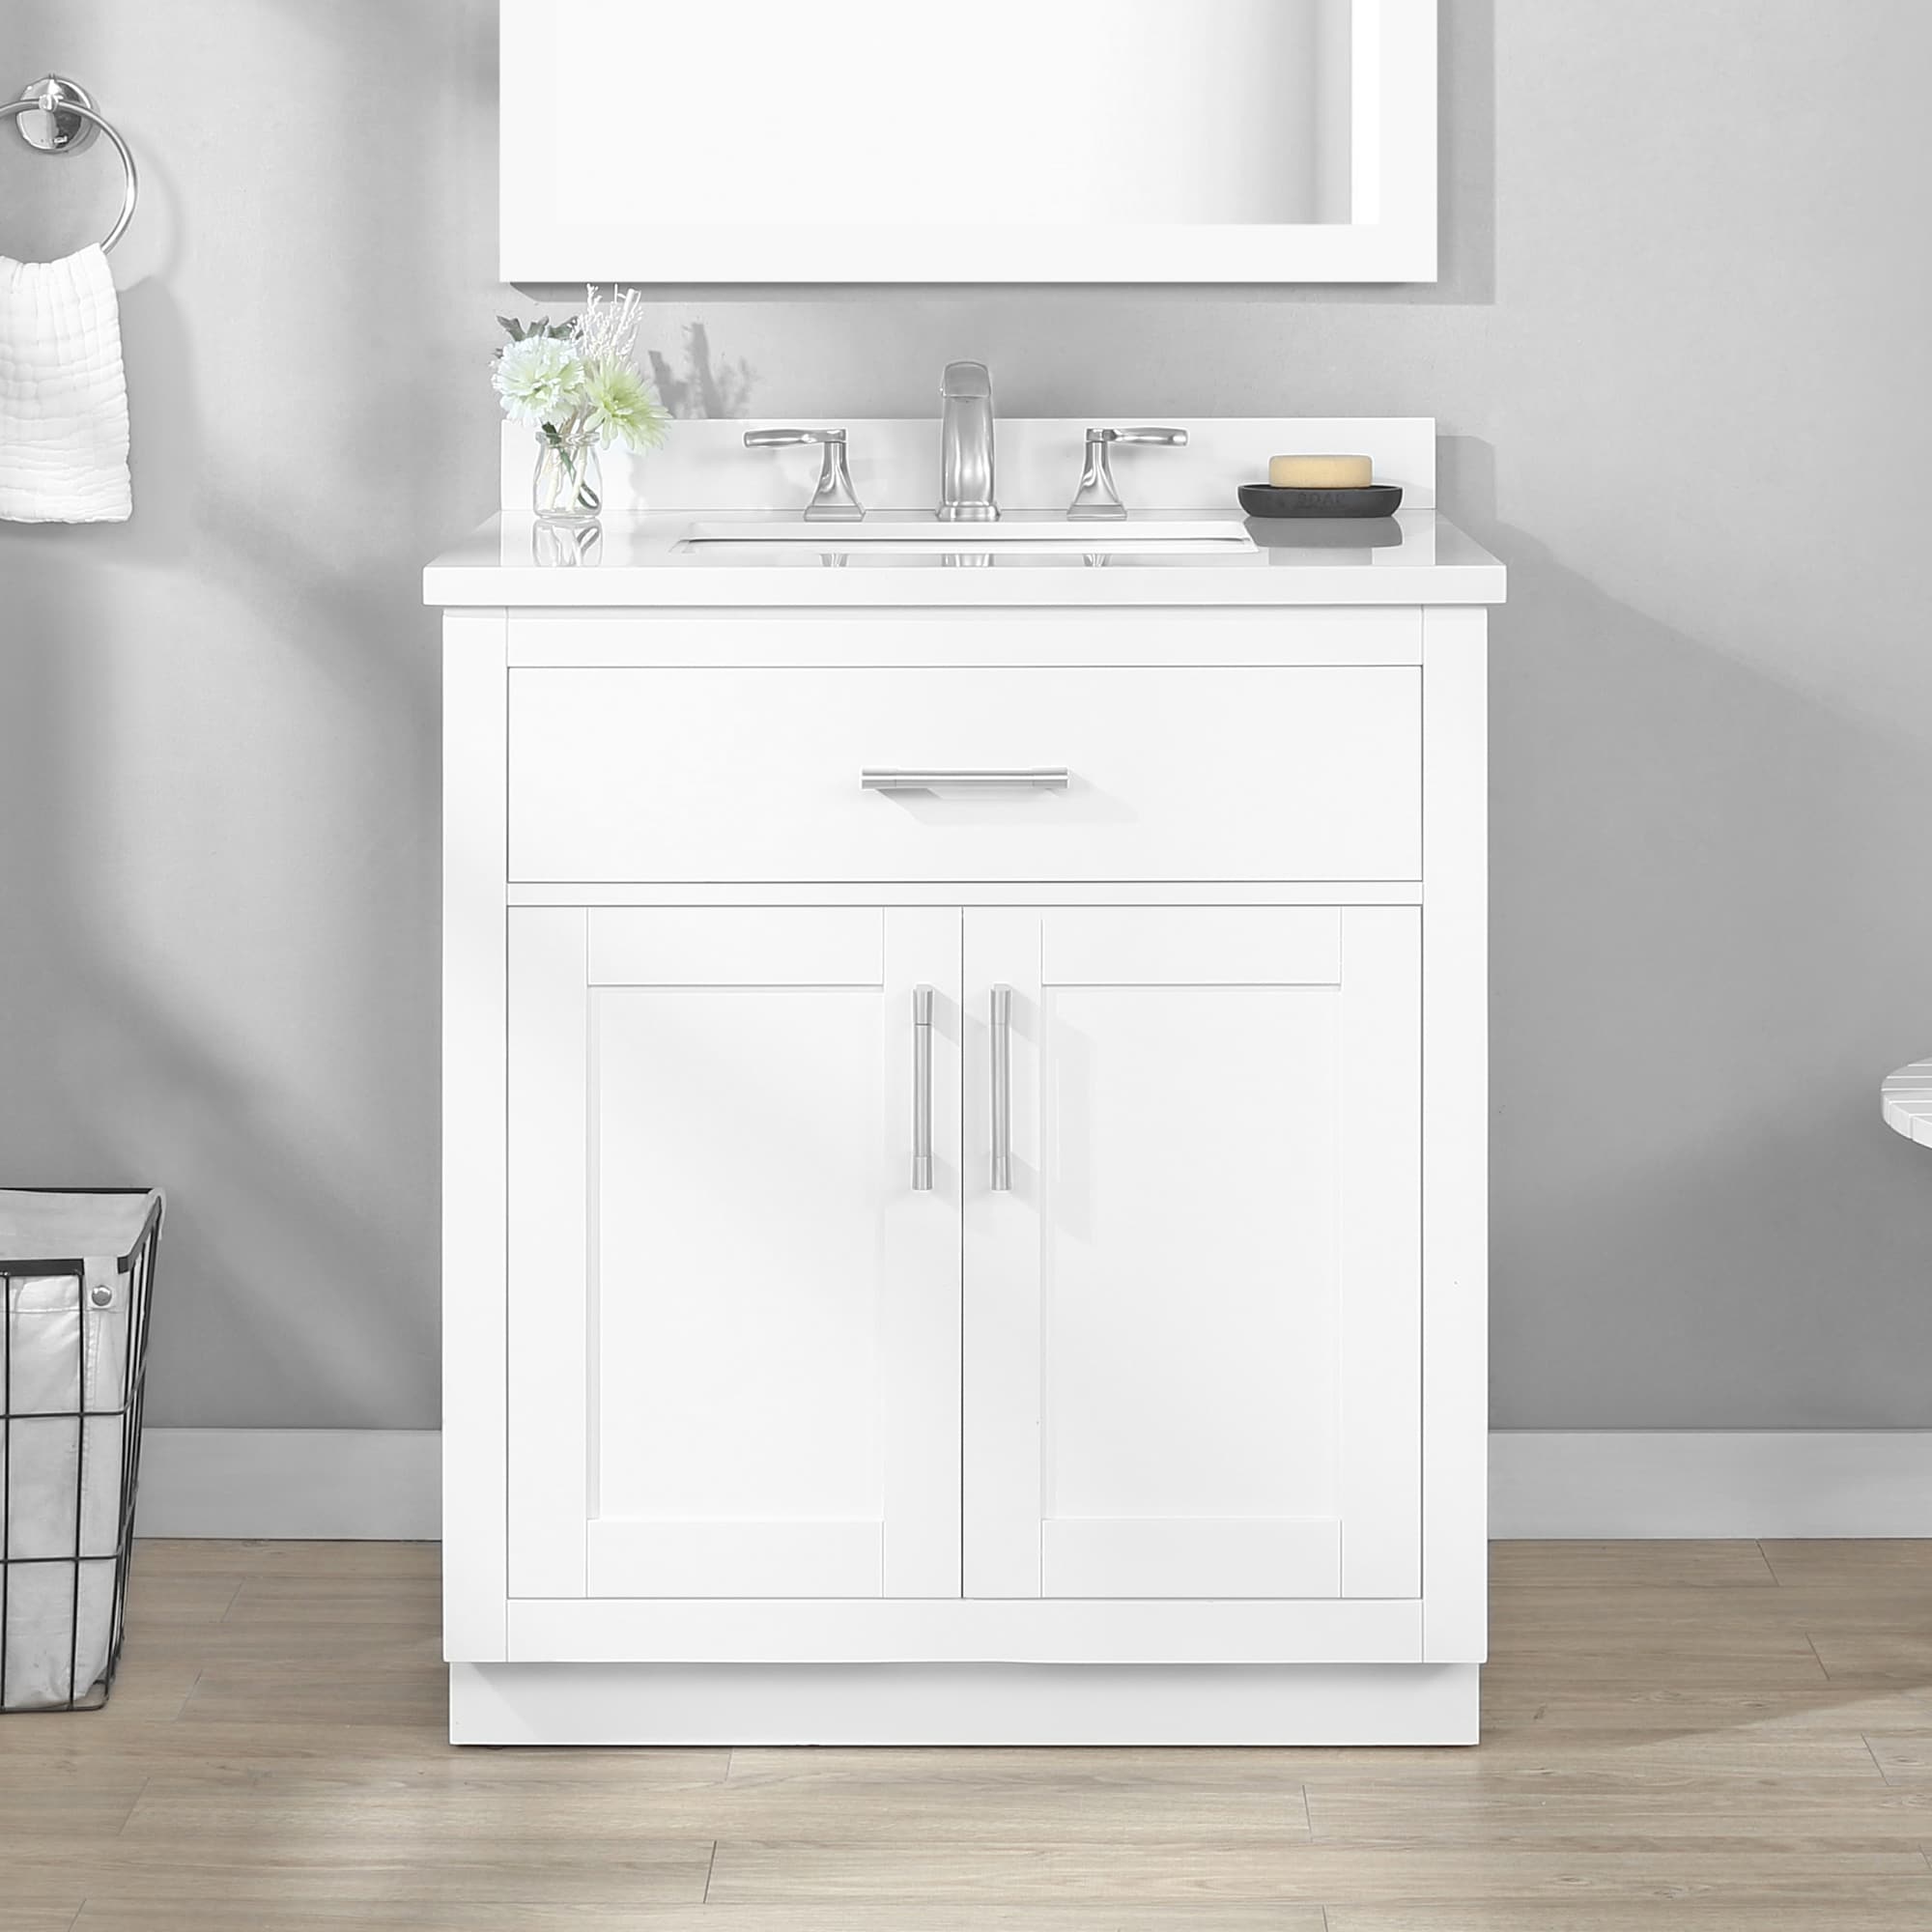 OVE Decors Bailey 30-in White Undermount Single Sink Bathroom Vanity ...